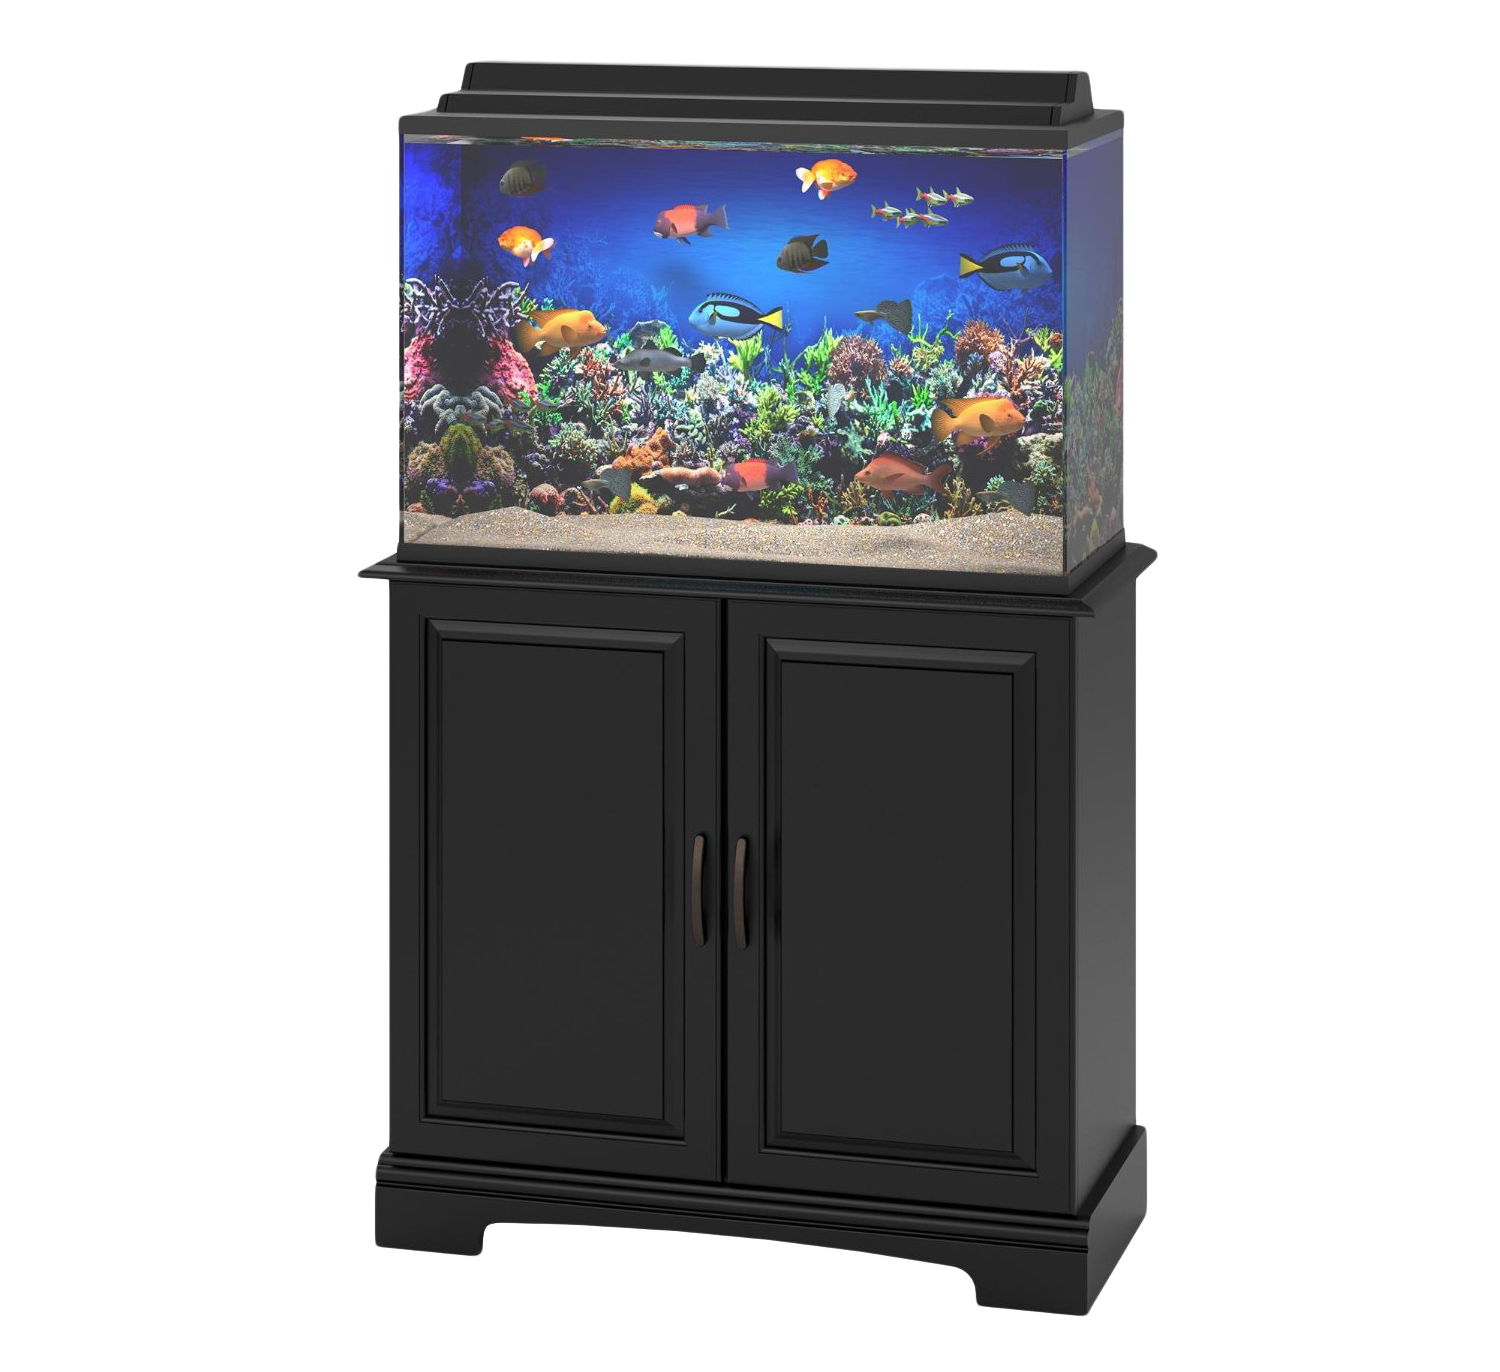 Download PNG image - Aquarium Fish Tank PNG Background Image 